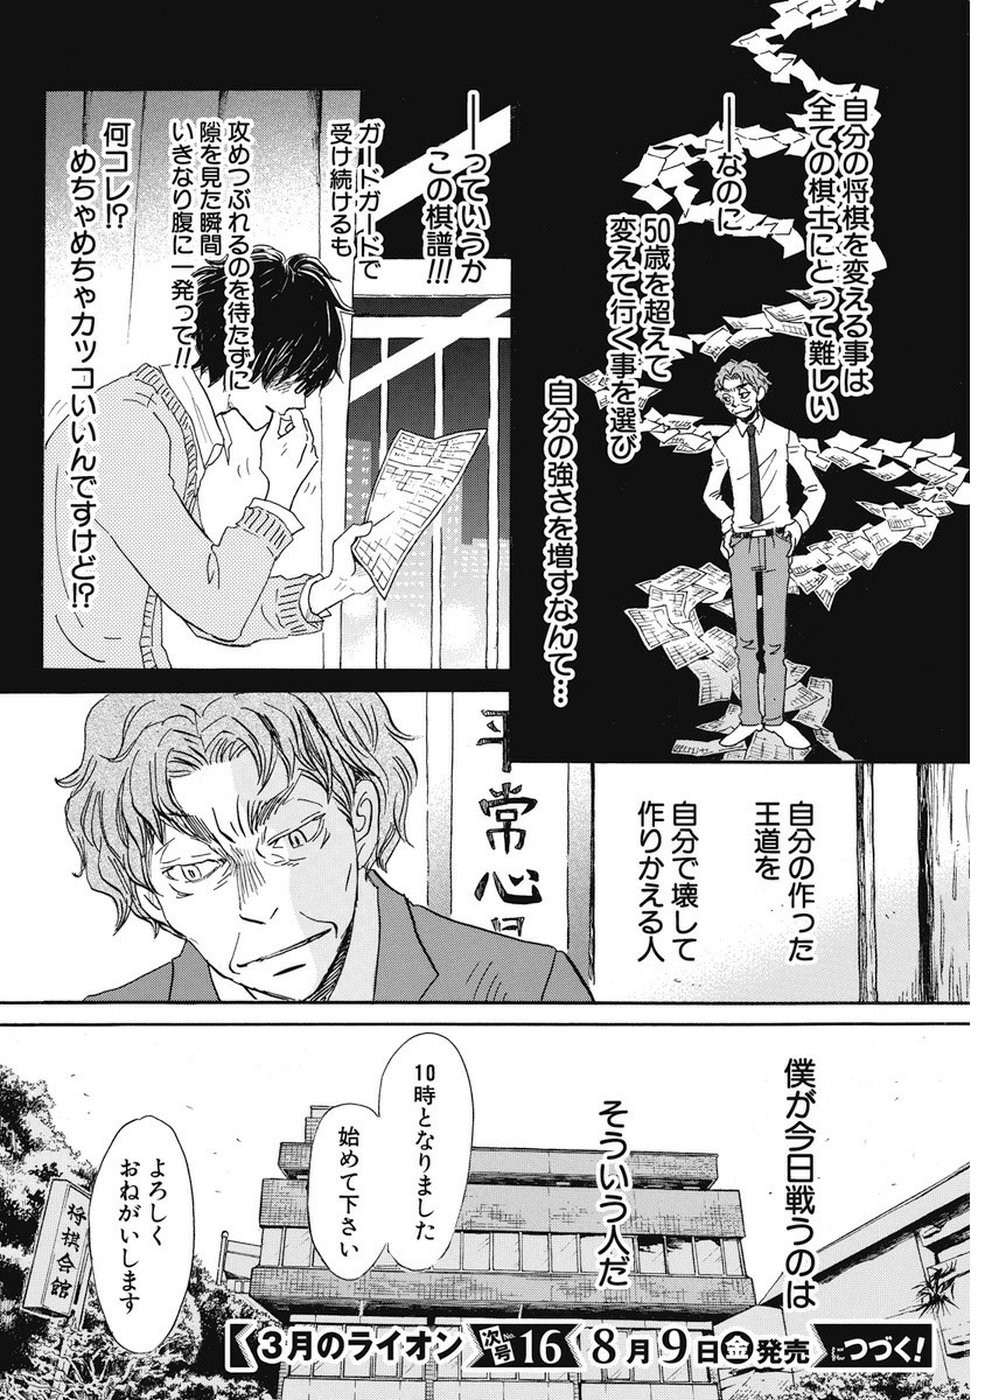 3 Gatsu no Lion - Chapter 161 - Page 10